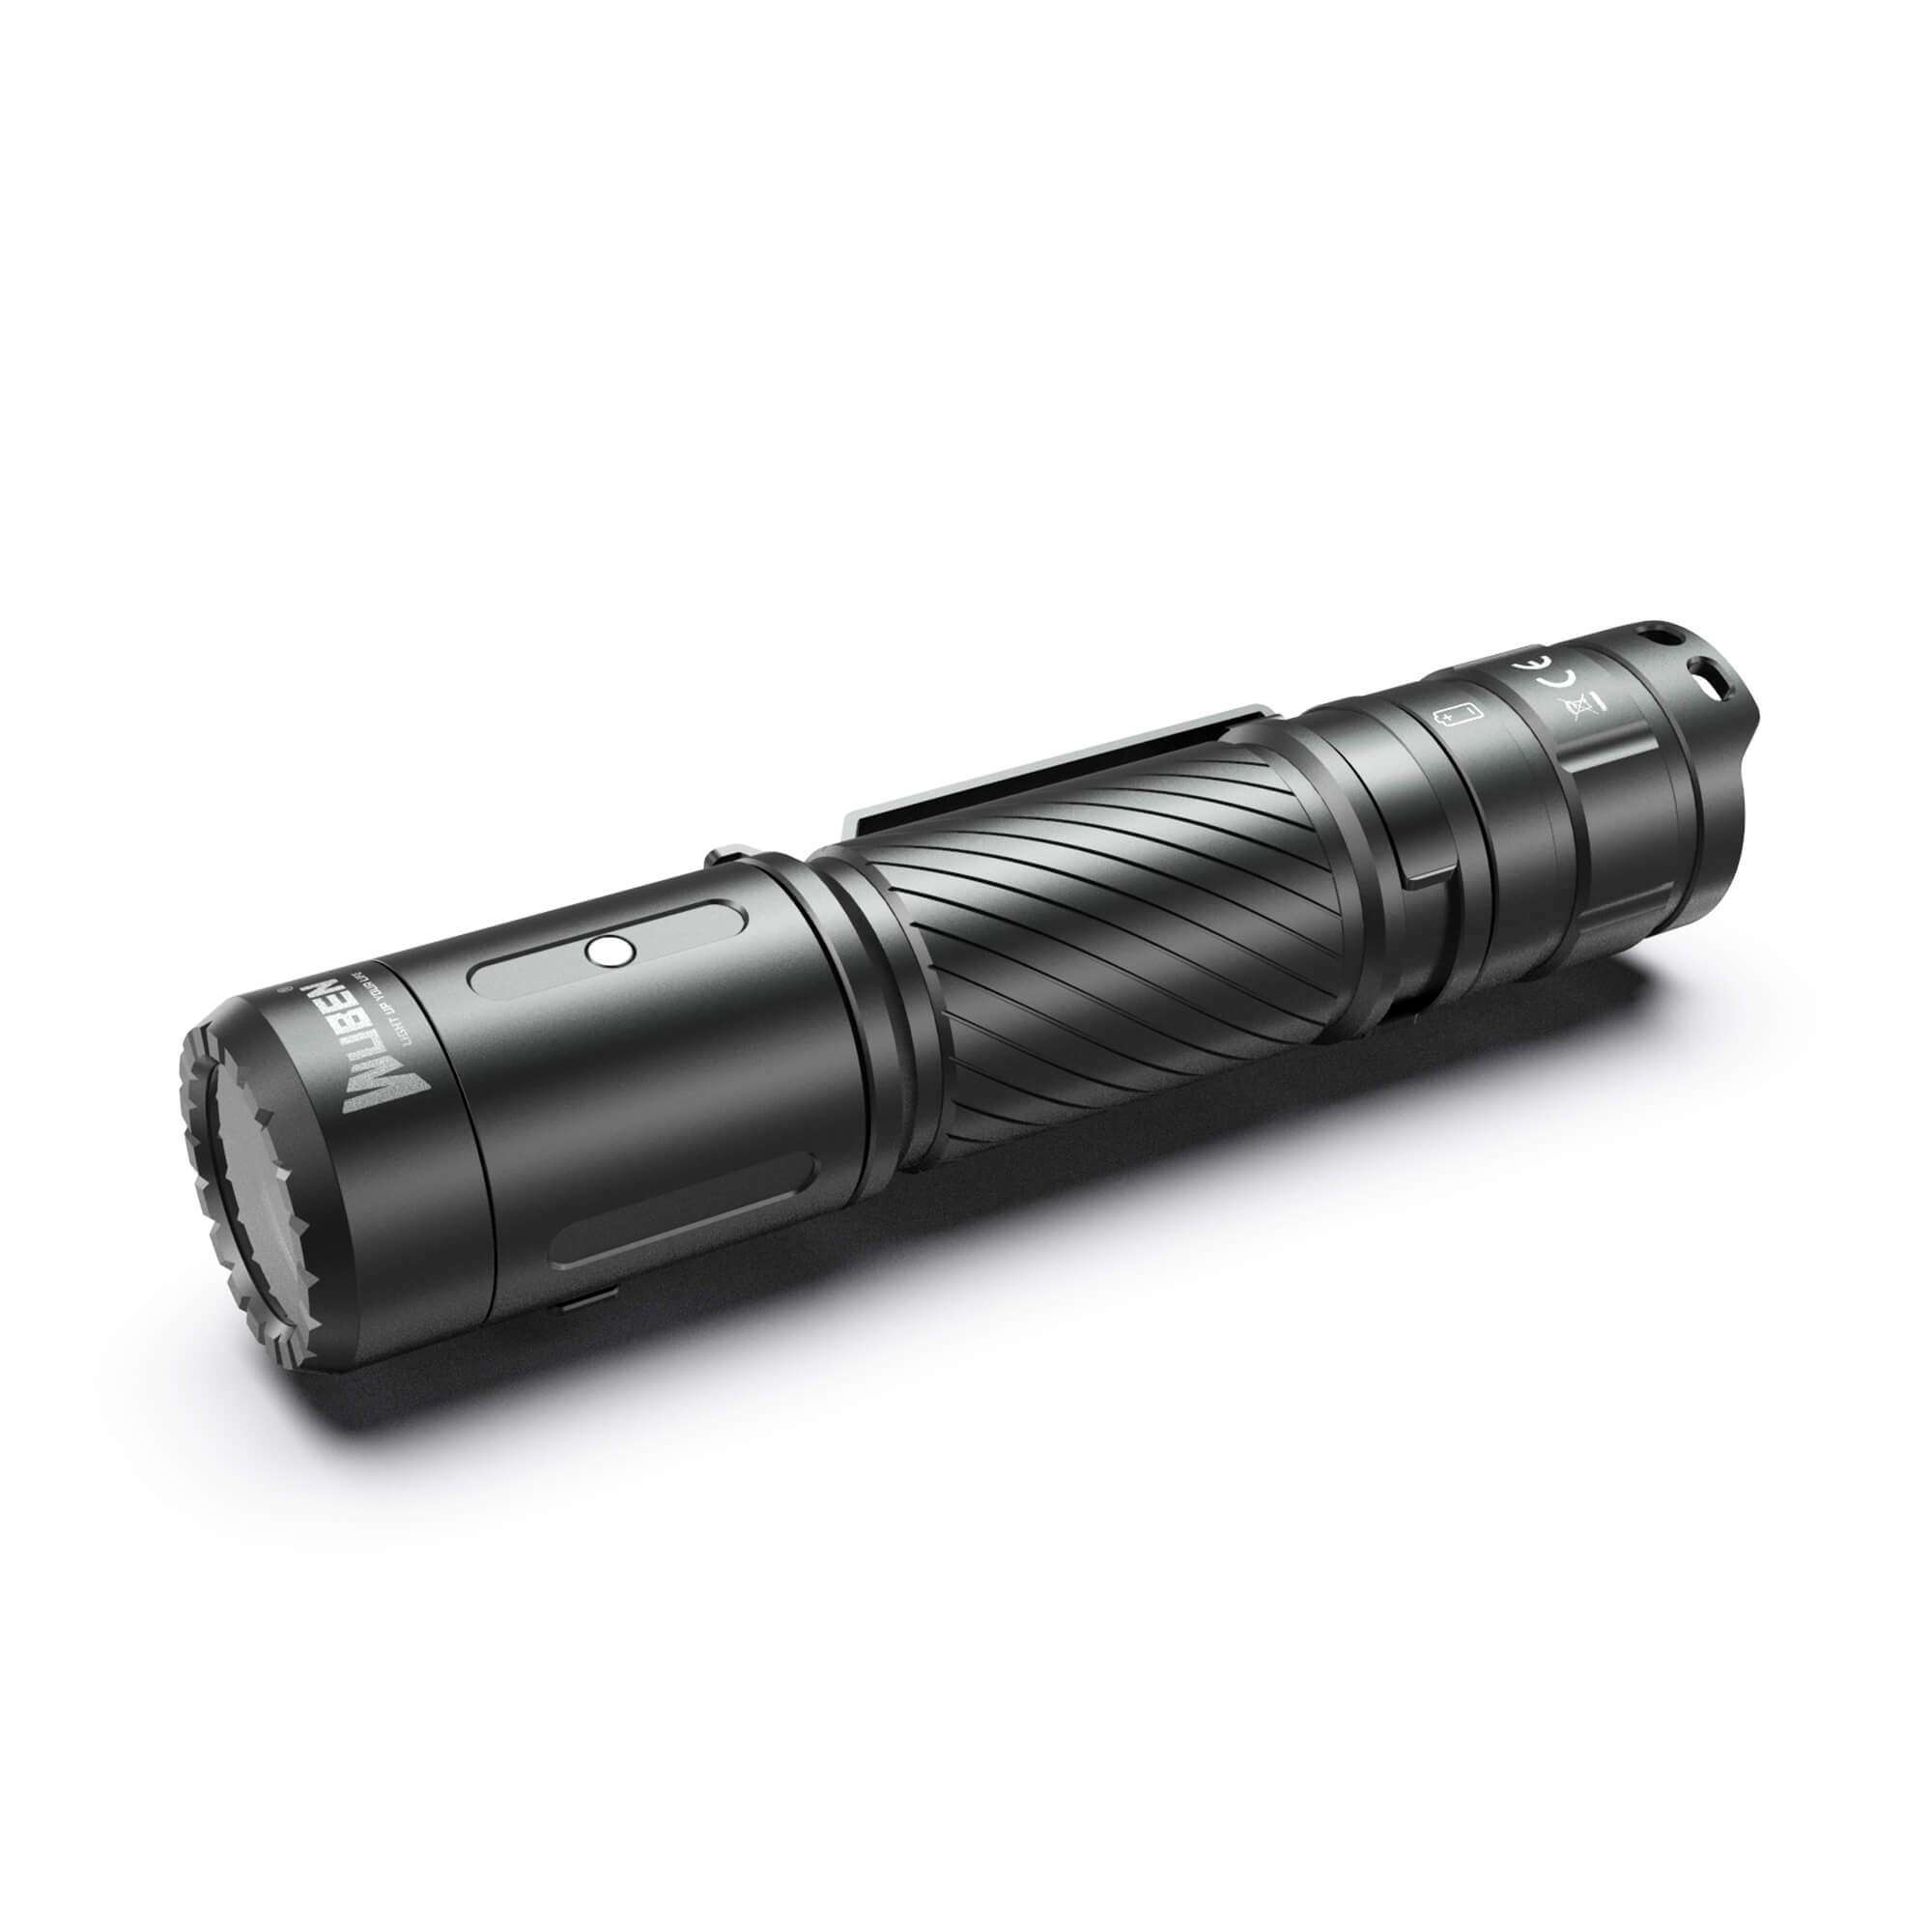 Wuben C3 Flashlight Long-Throw Bright 1200 lm Waterproof